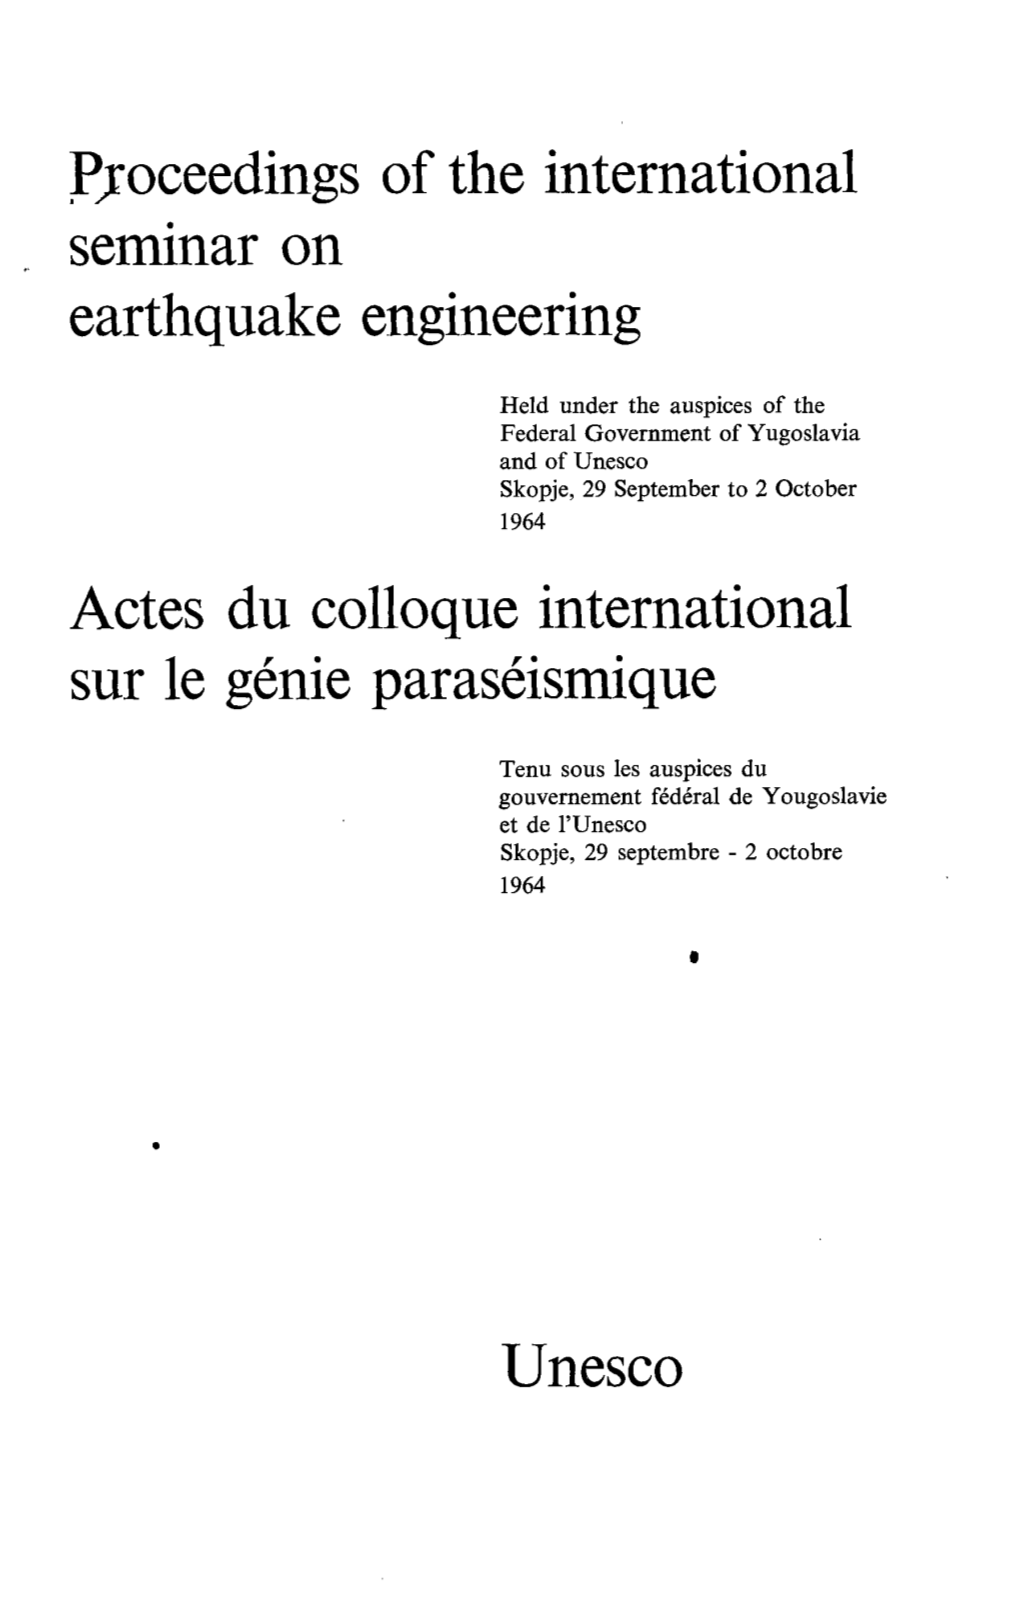 International Seminar on Earthquake Engineering